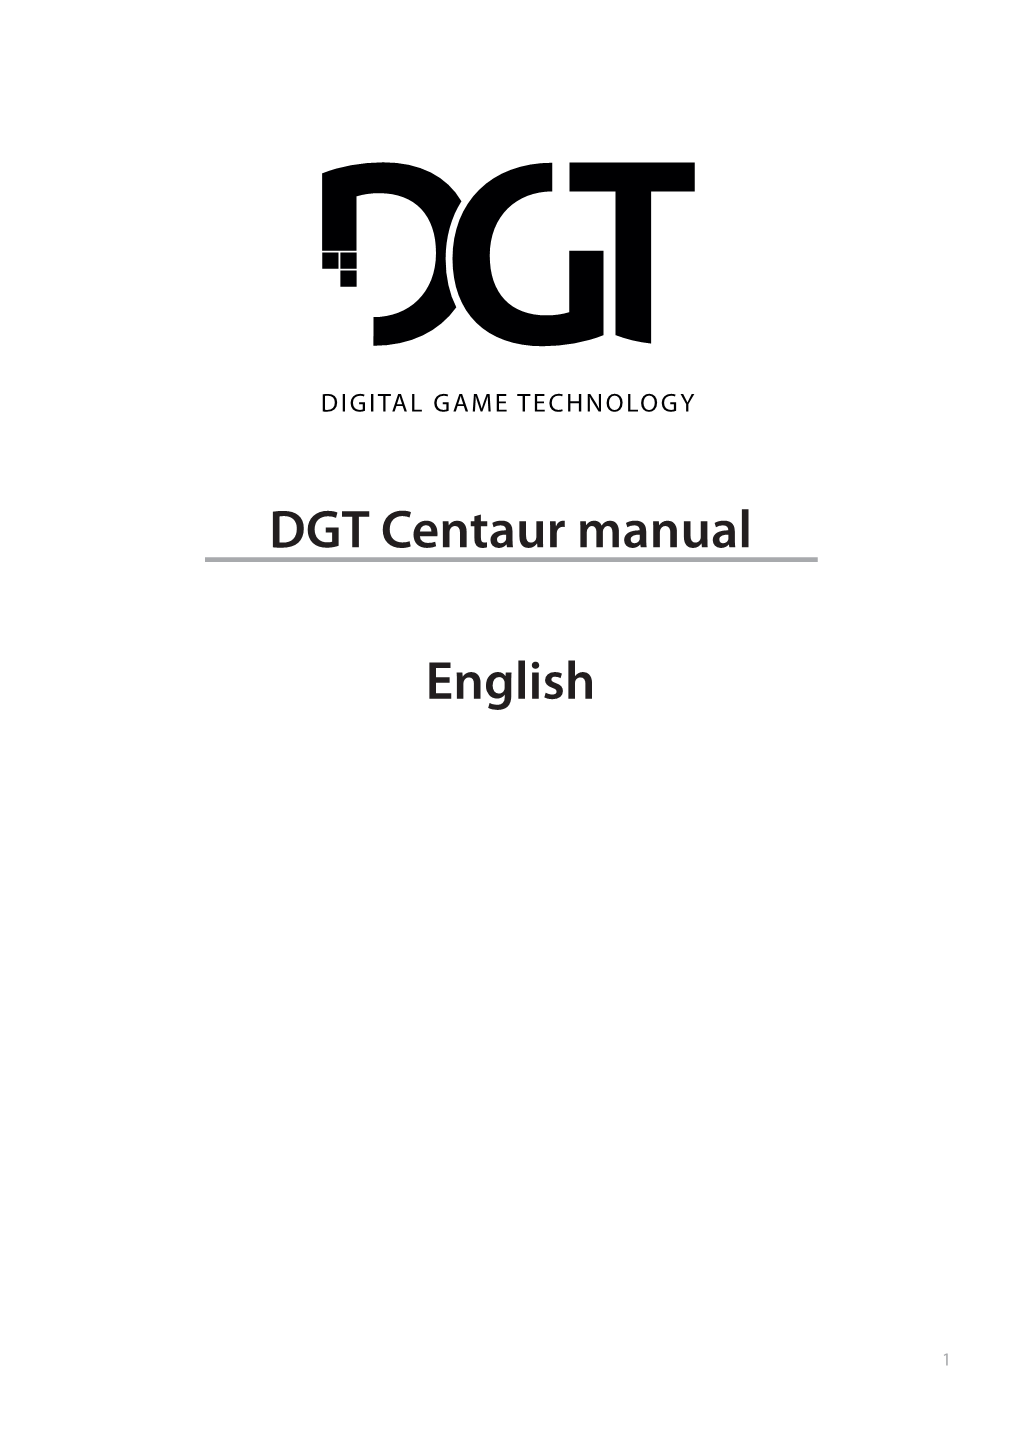 DGT Centaur Manual English